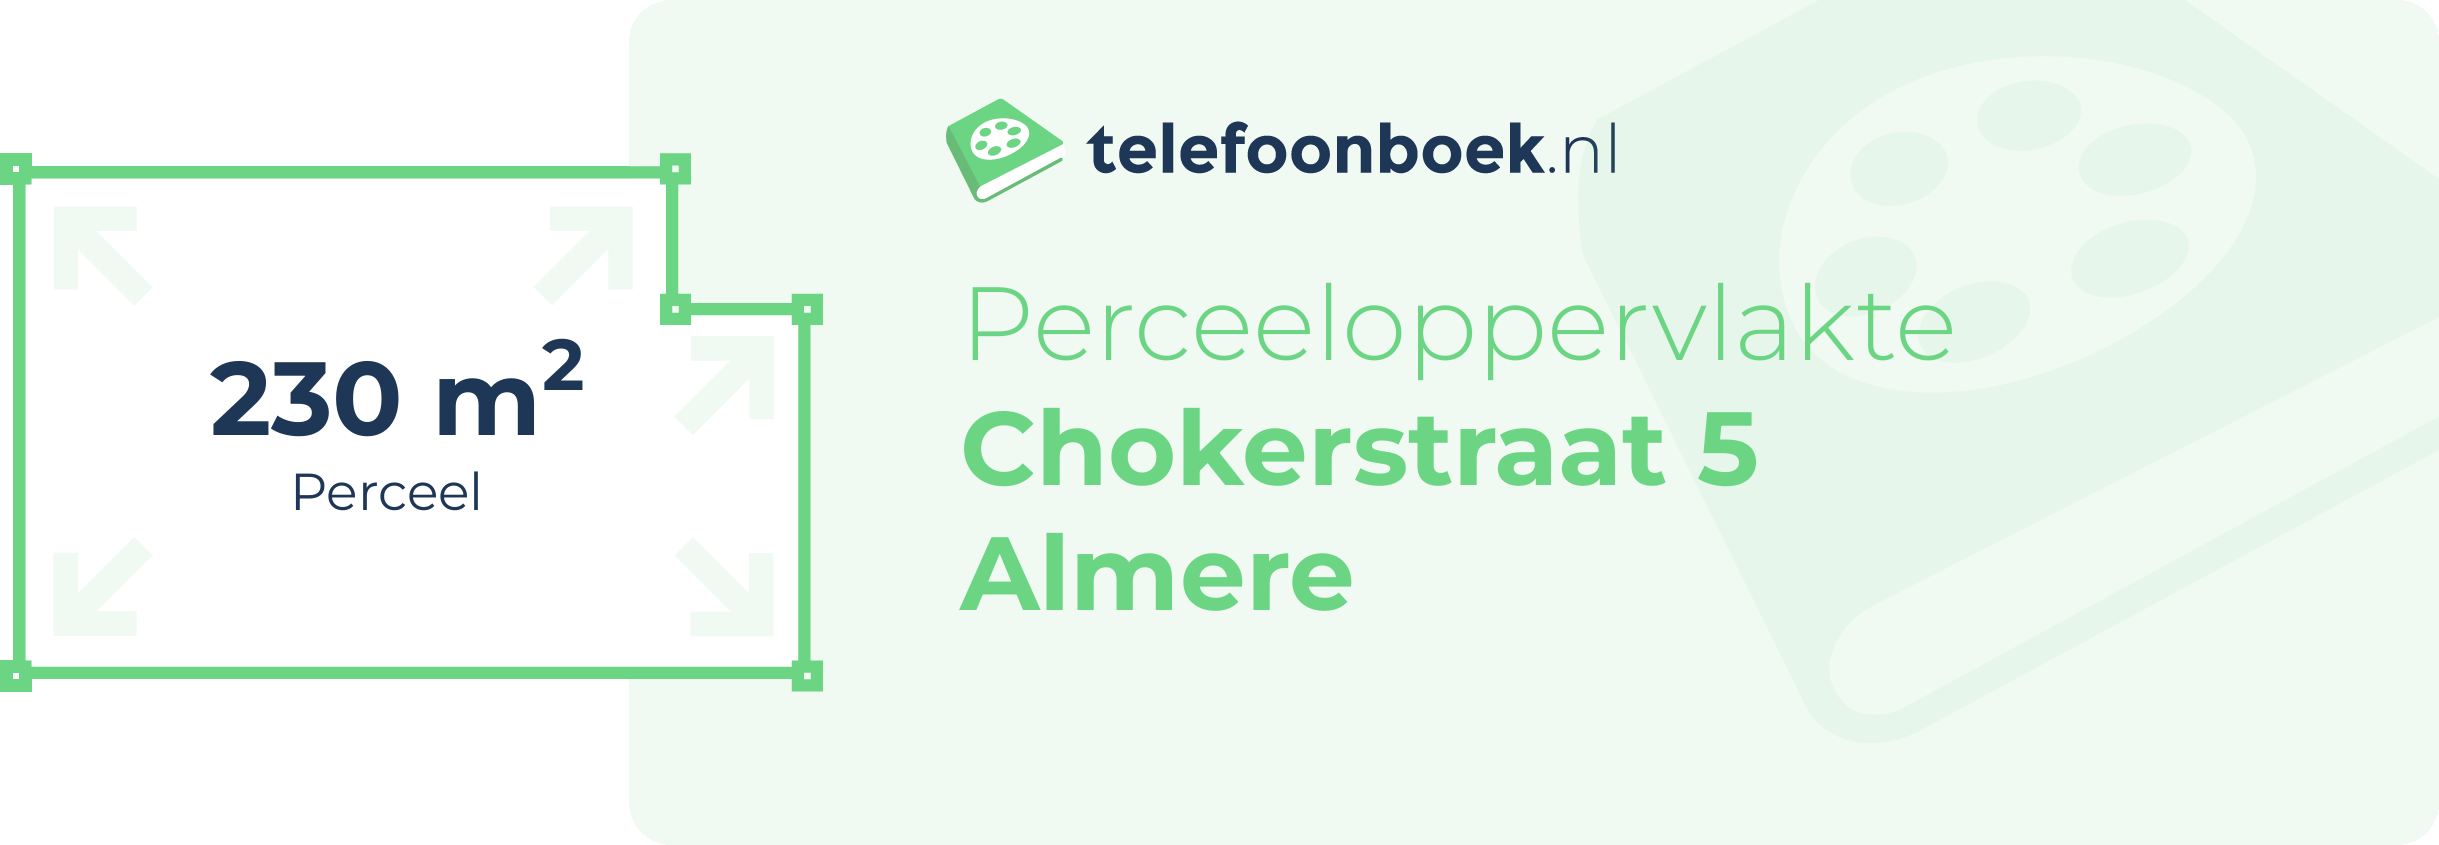 Perceeloppervlakte Chokerstraat 5 Almere